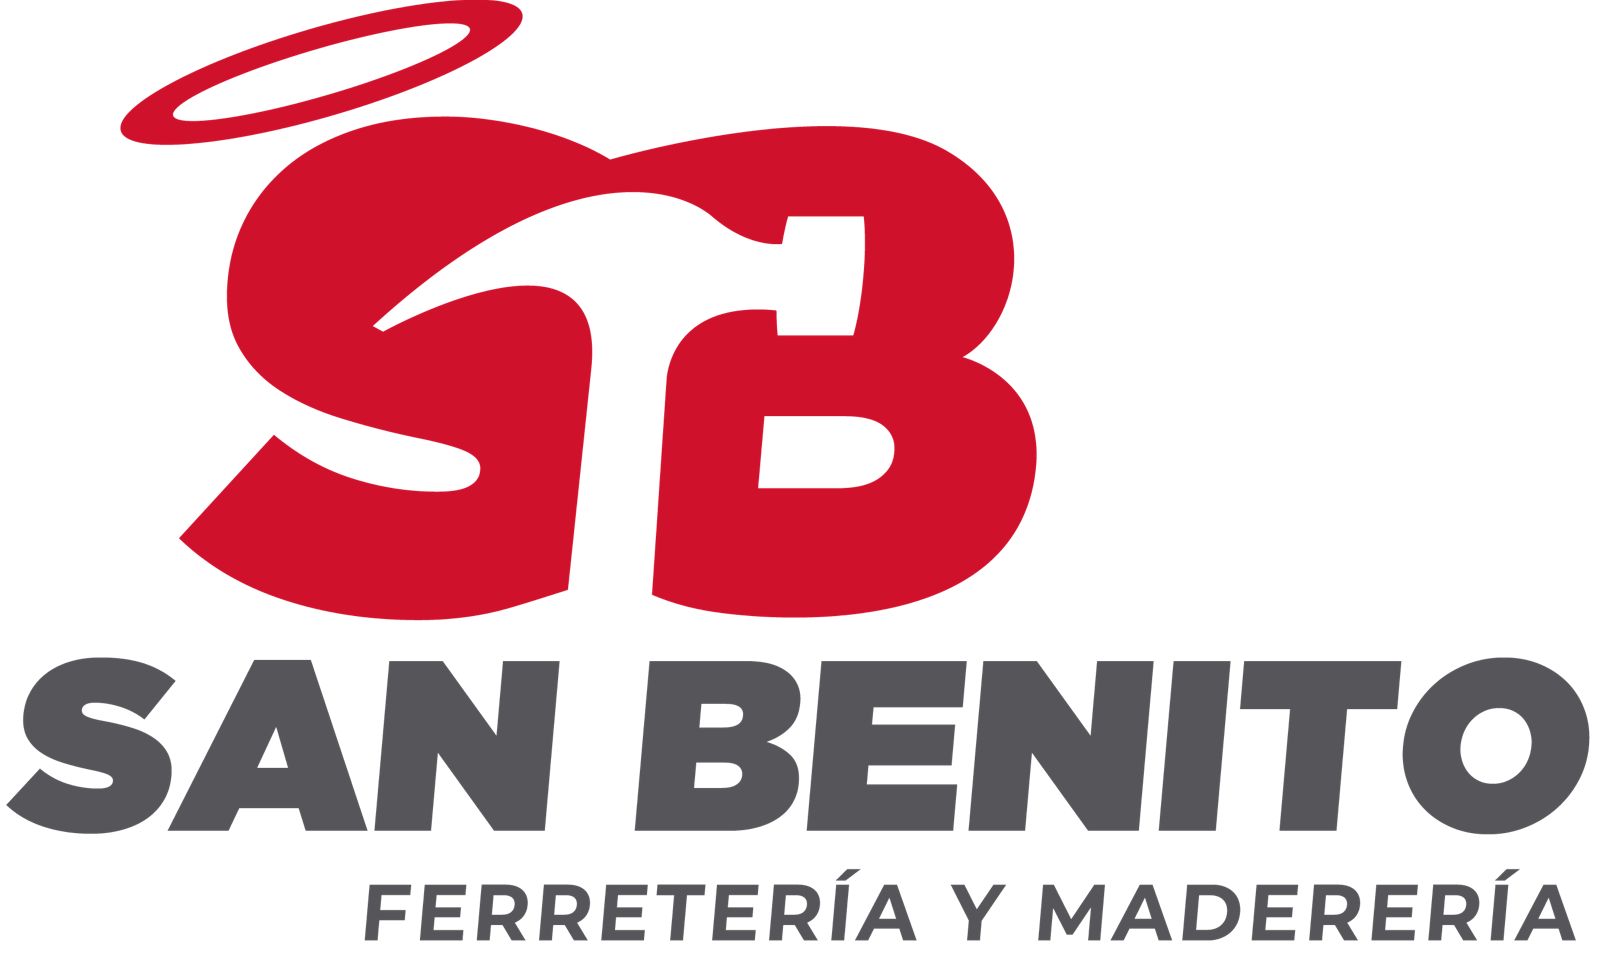 Ferretería San Benito